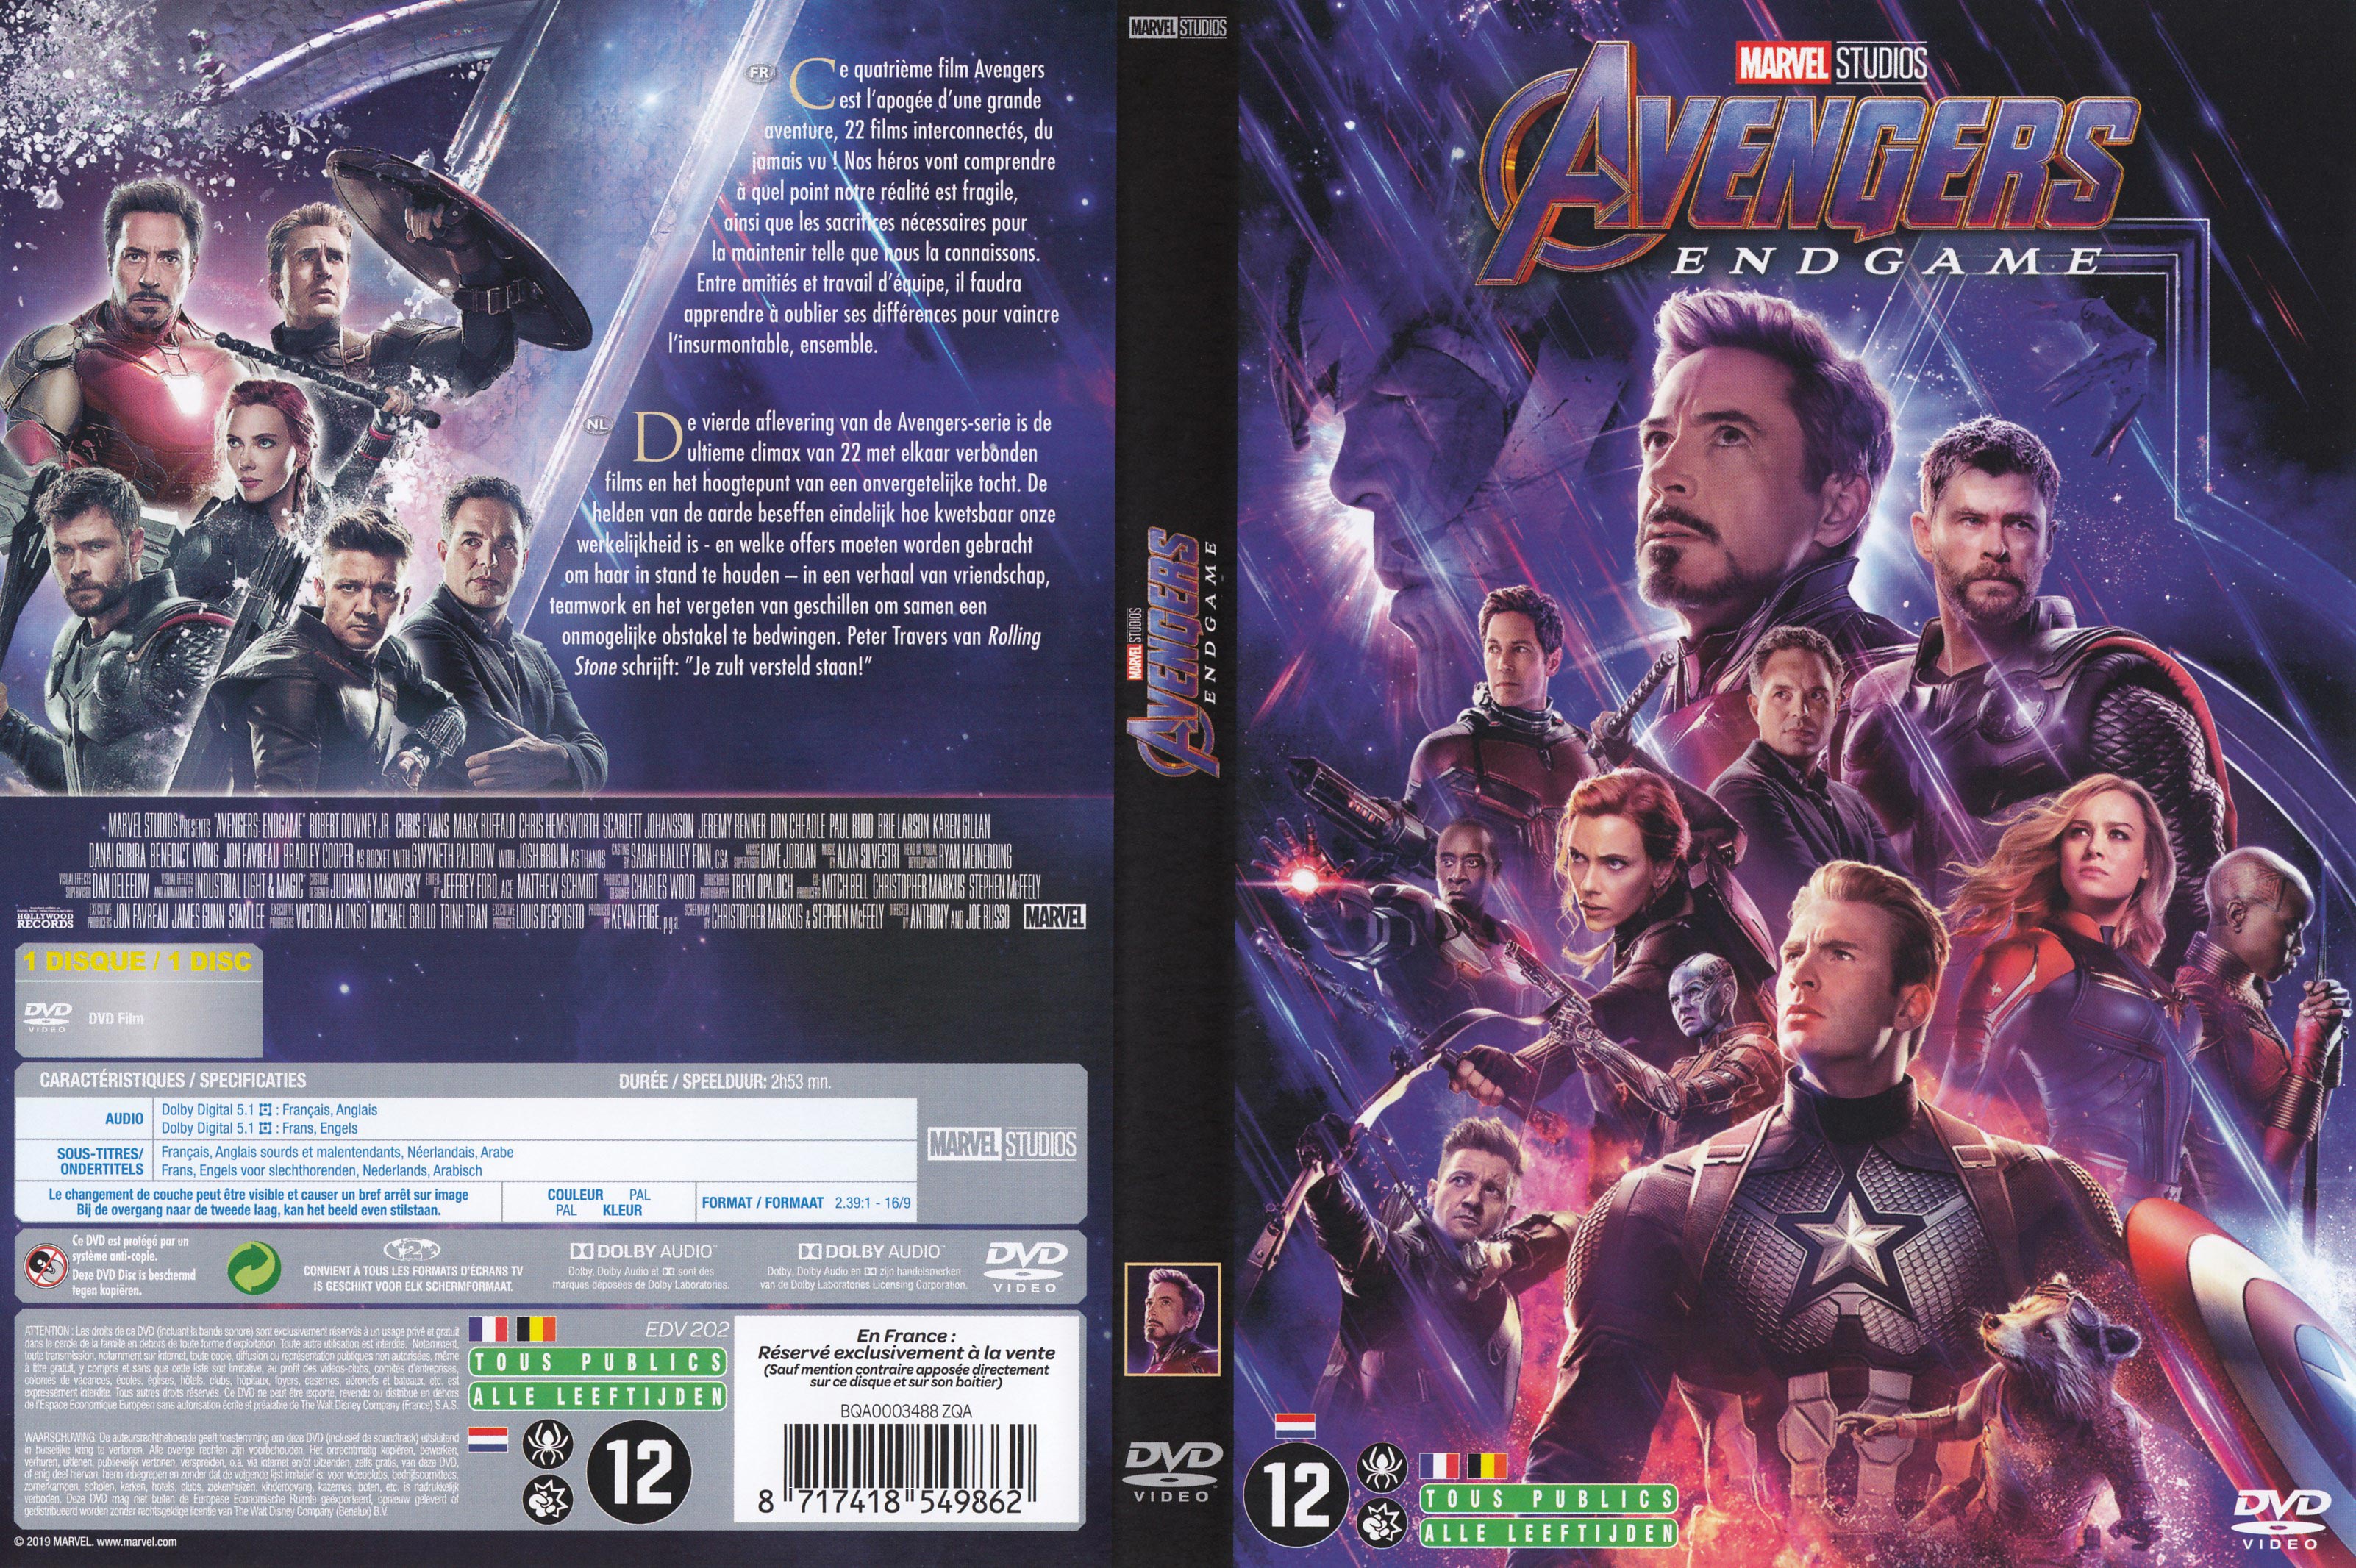 Jaquette DVD Avengers: Endgame